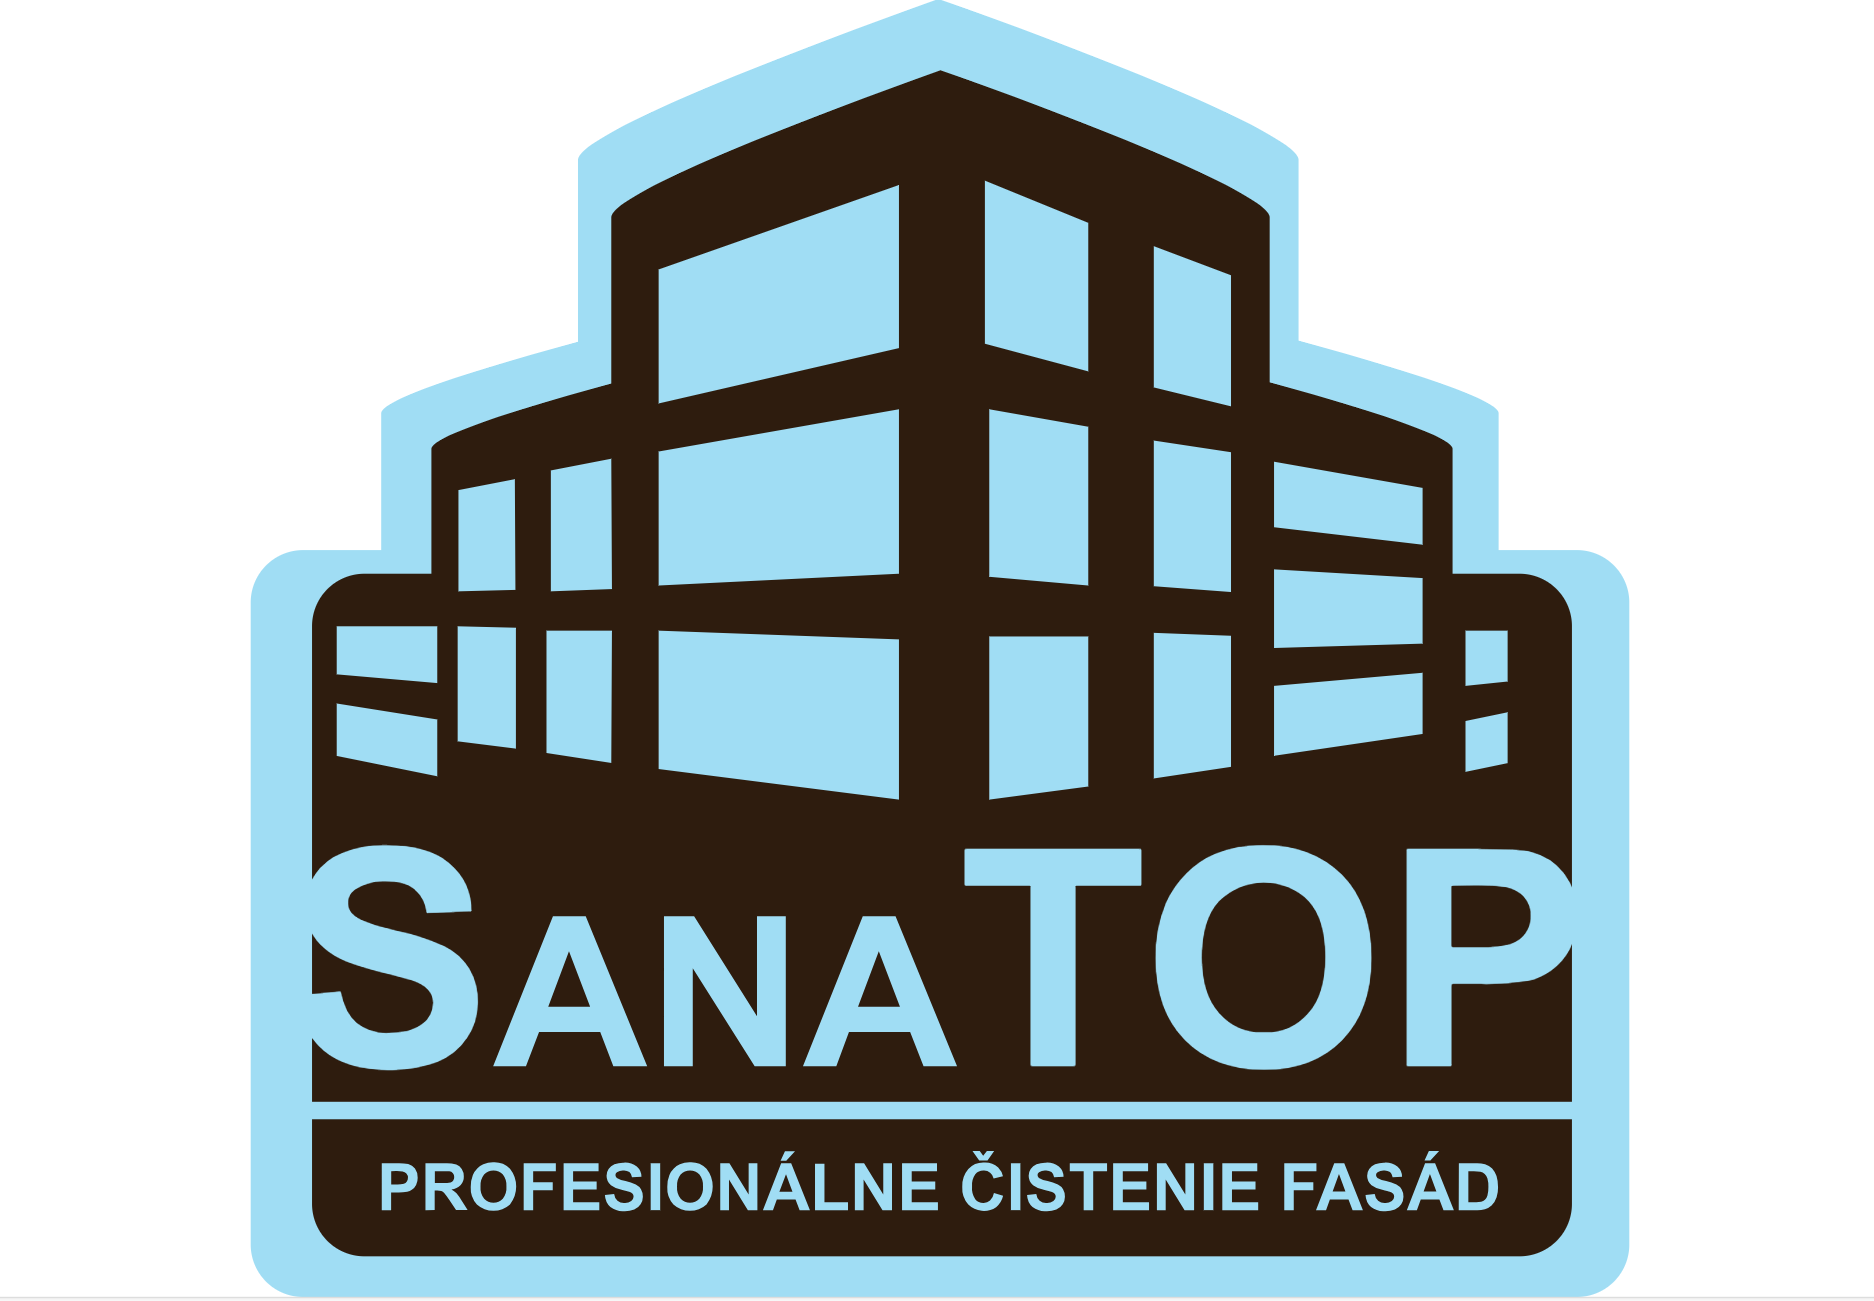 sanatop logo